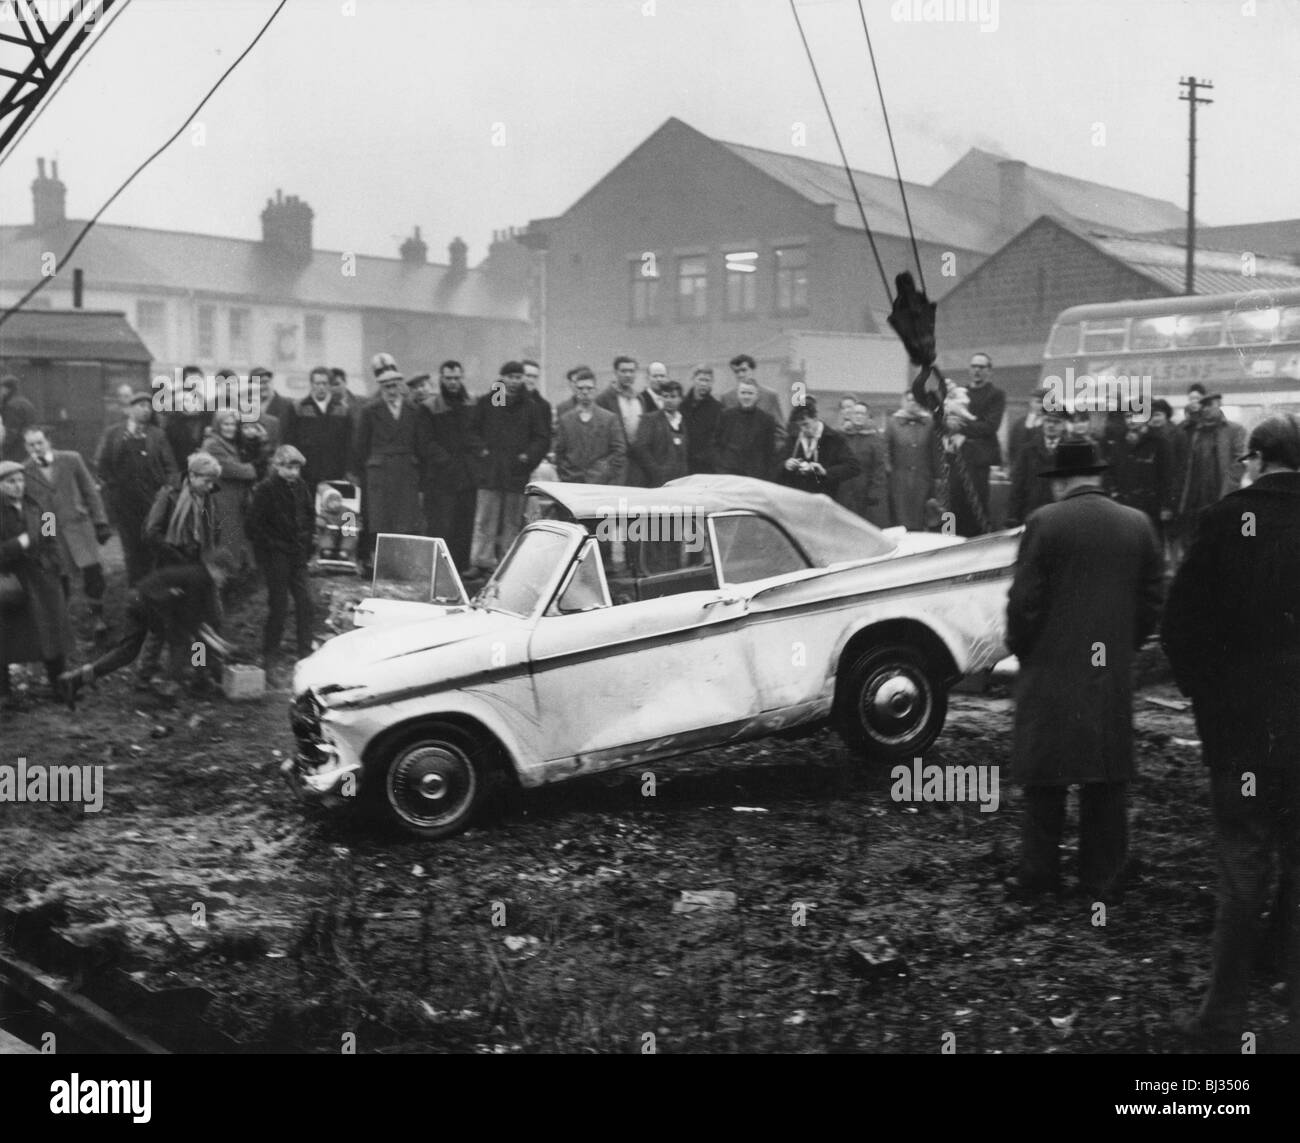 Sunbeam Rapier car accident, Kilnhurst, South Yorkshire, 1964.  Artist: Michael Walters. Stock Photo